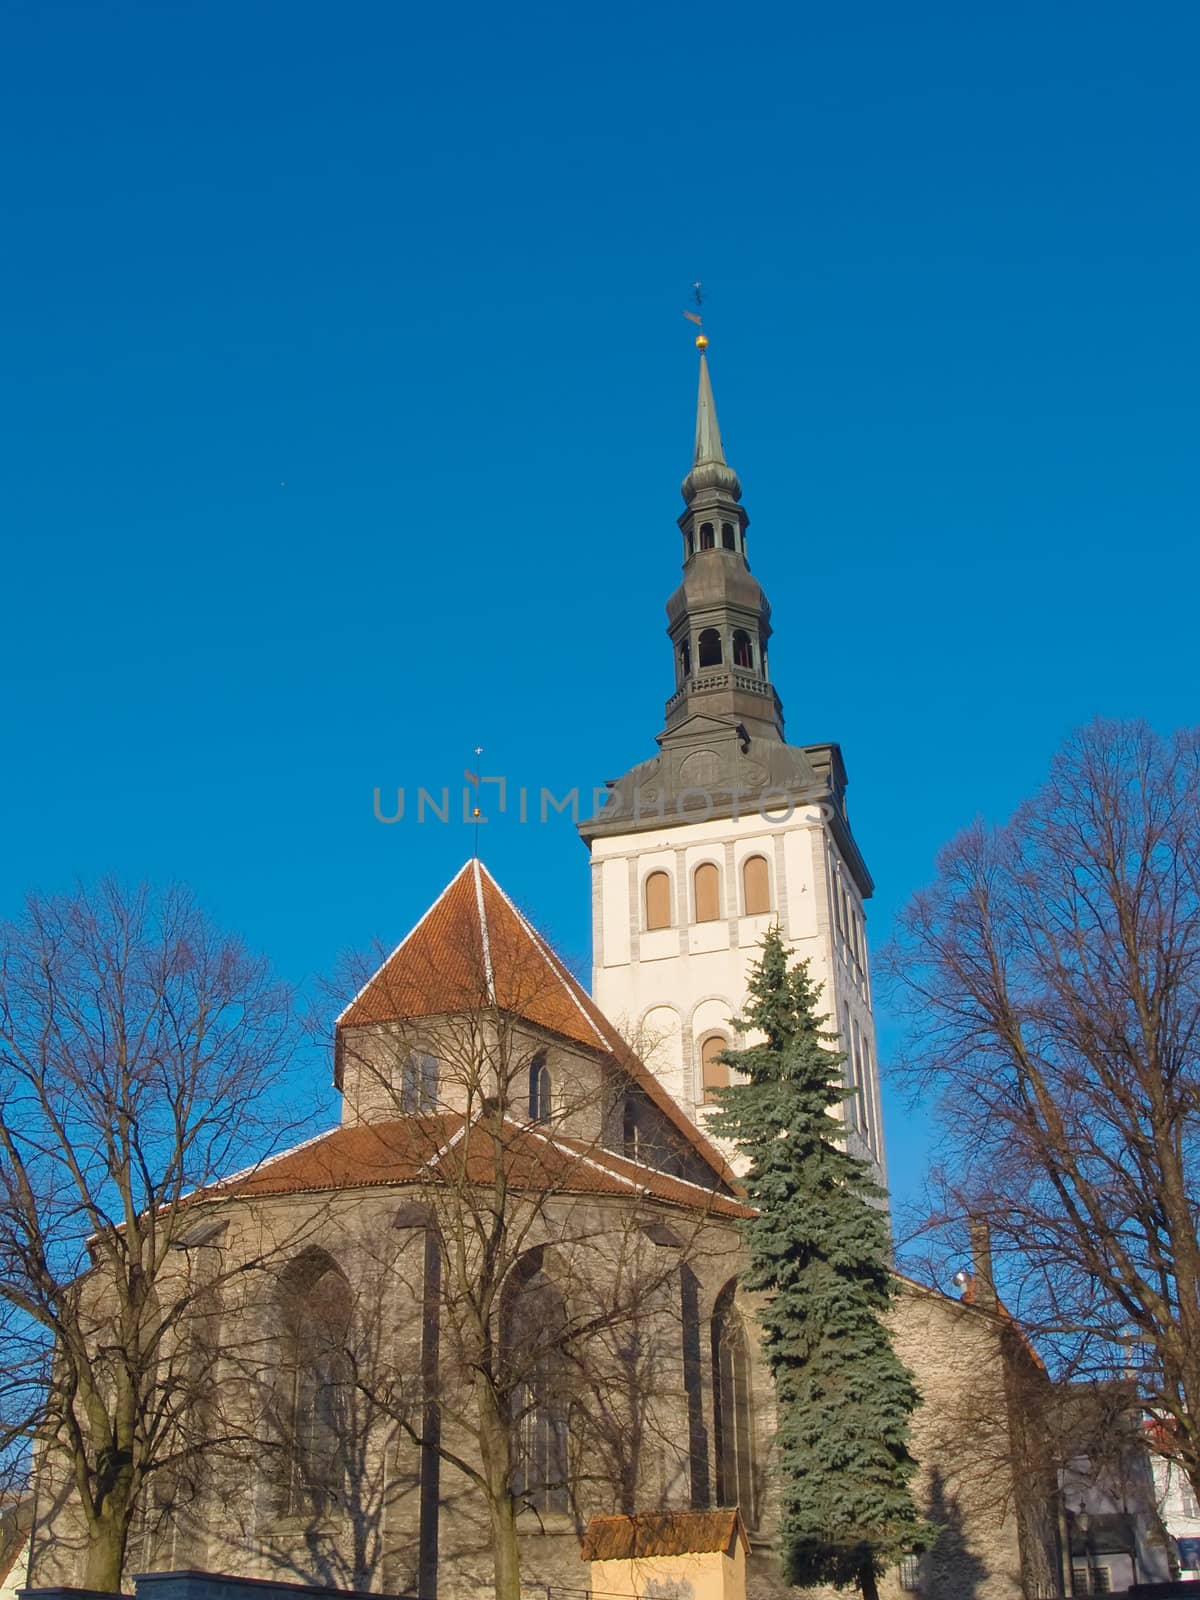 Architectural details a belltower of cathedral Niguliste, Tallinn